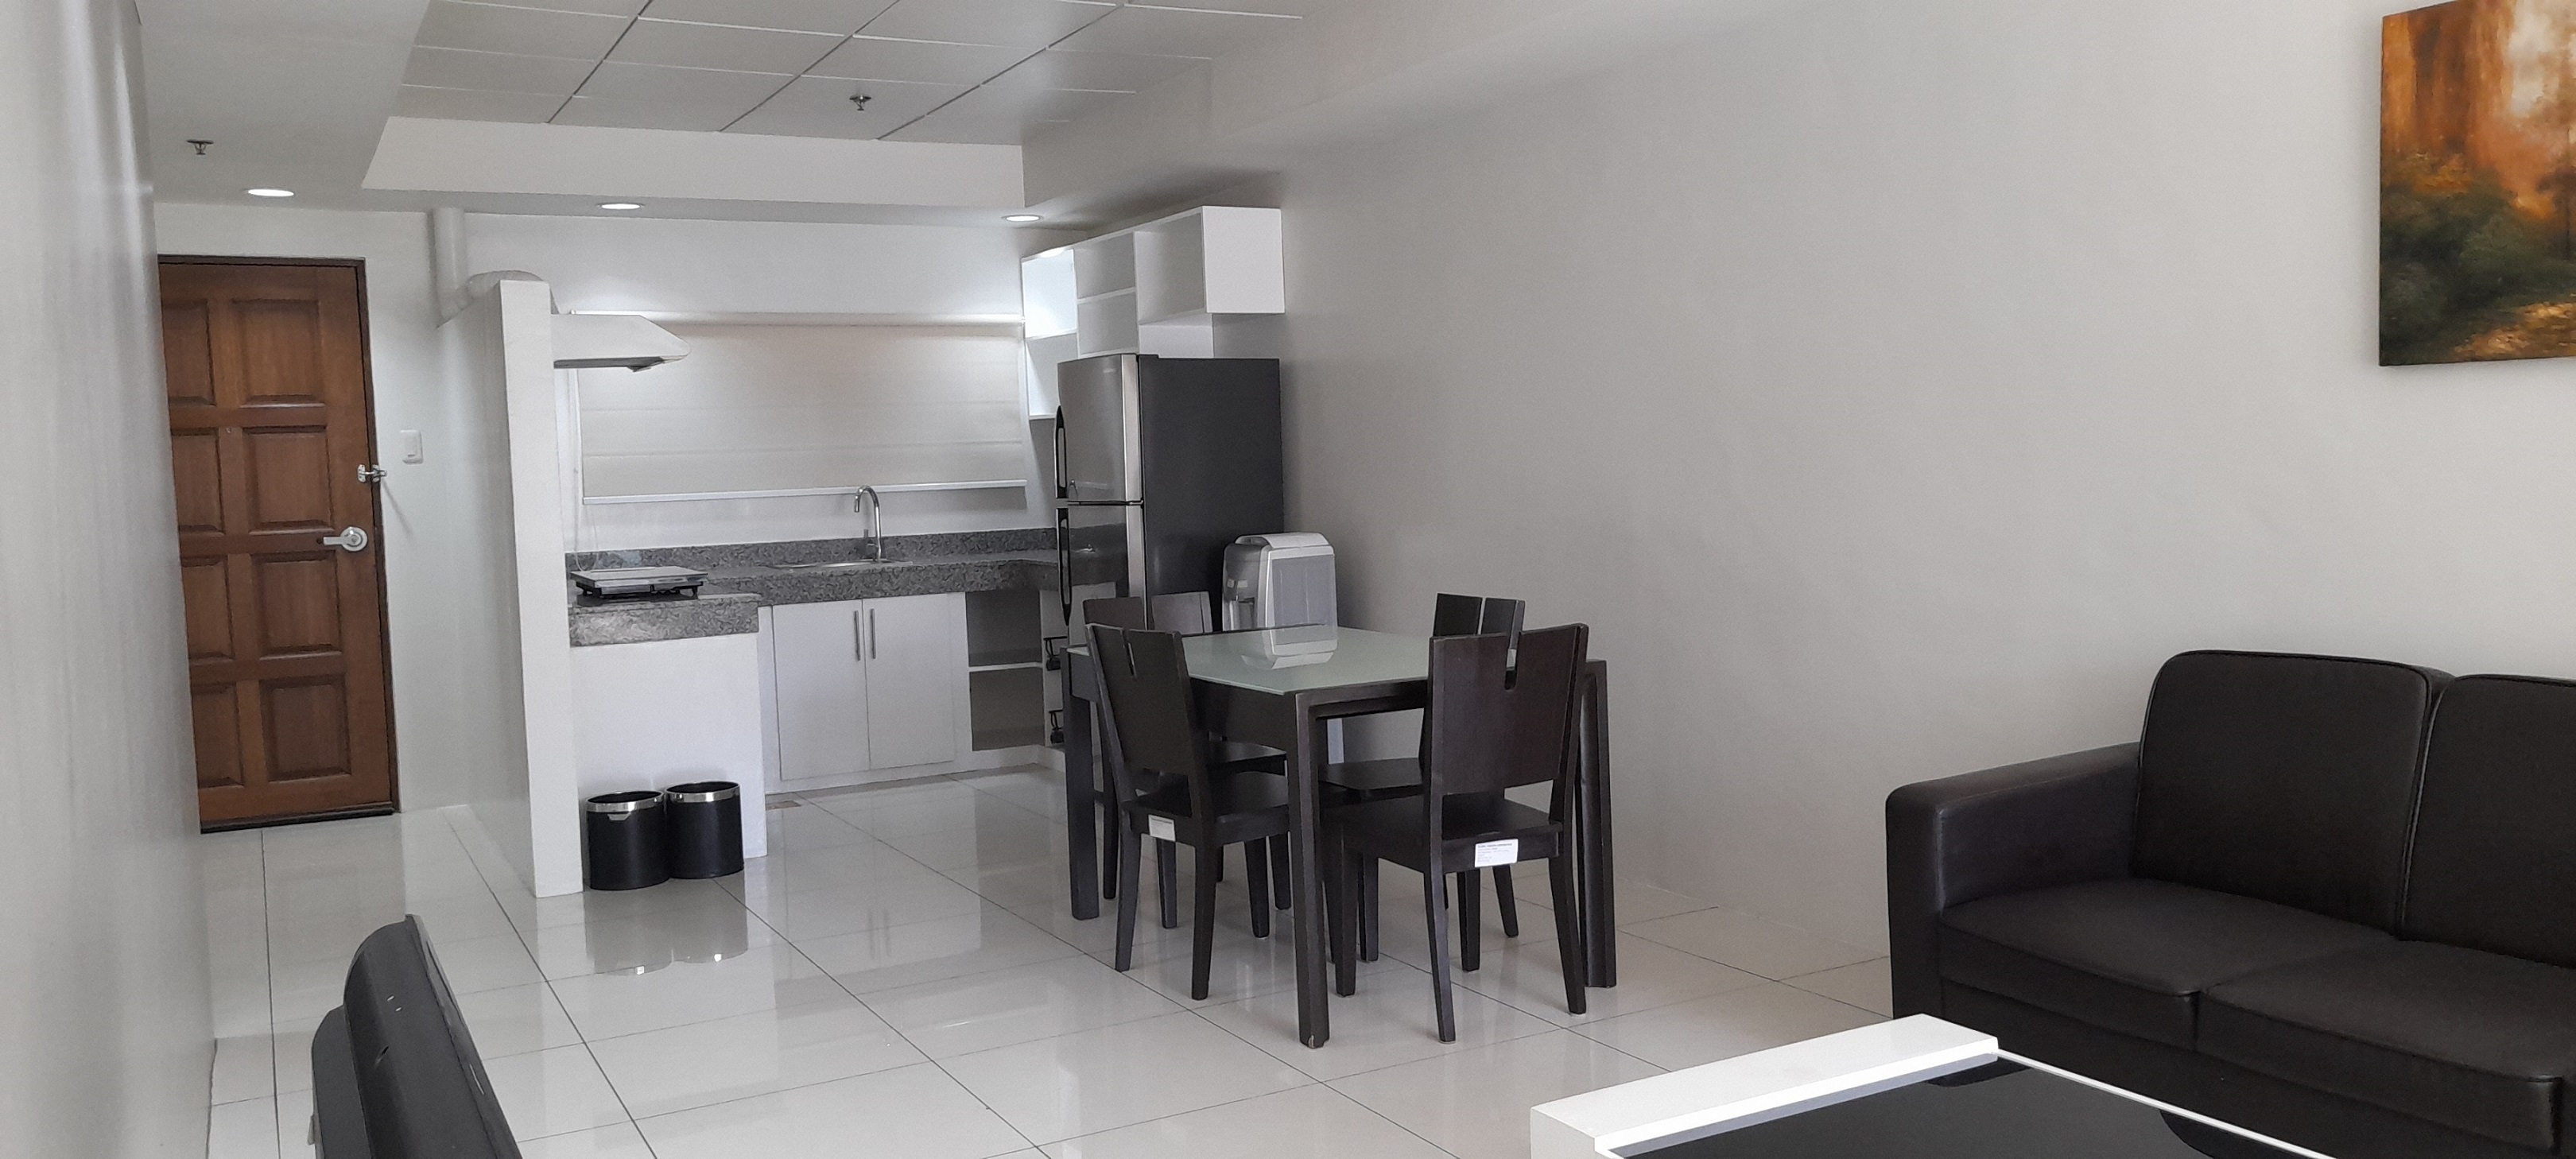 2-bedroom-furnished-apartment-in-near-ayala-cebu-city